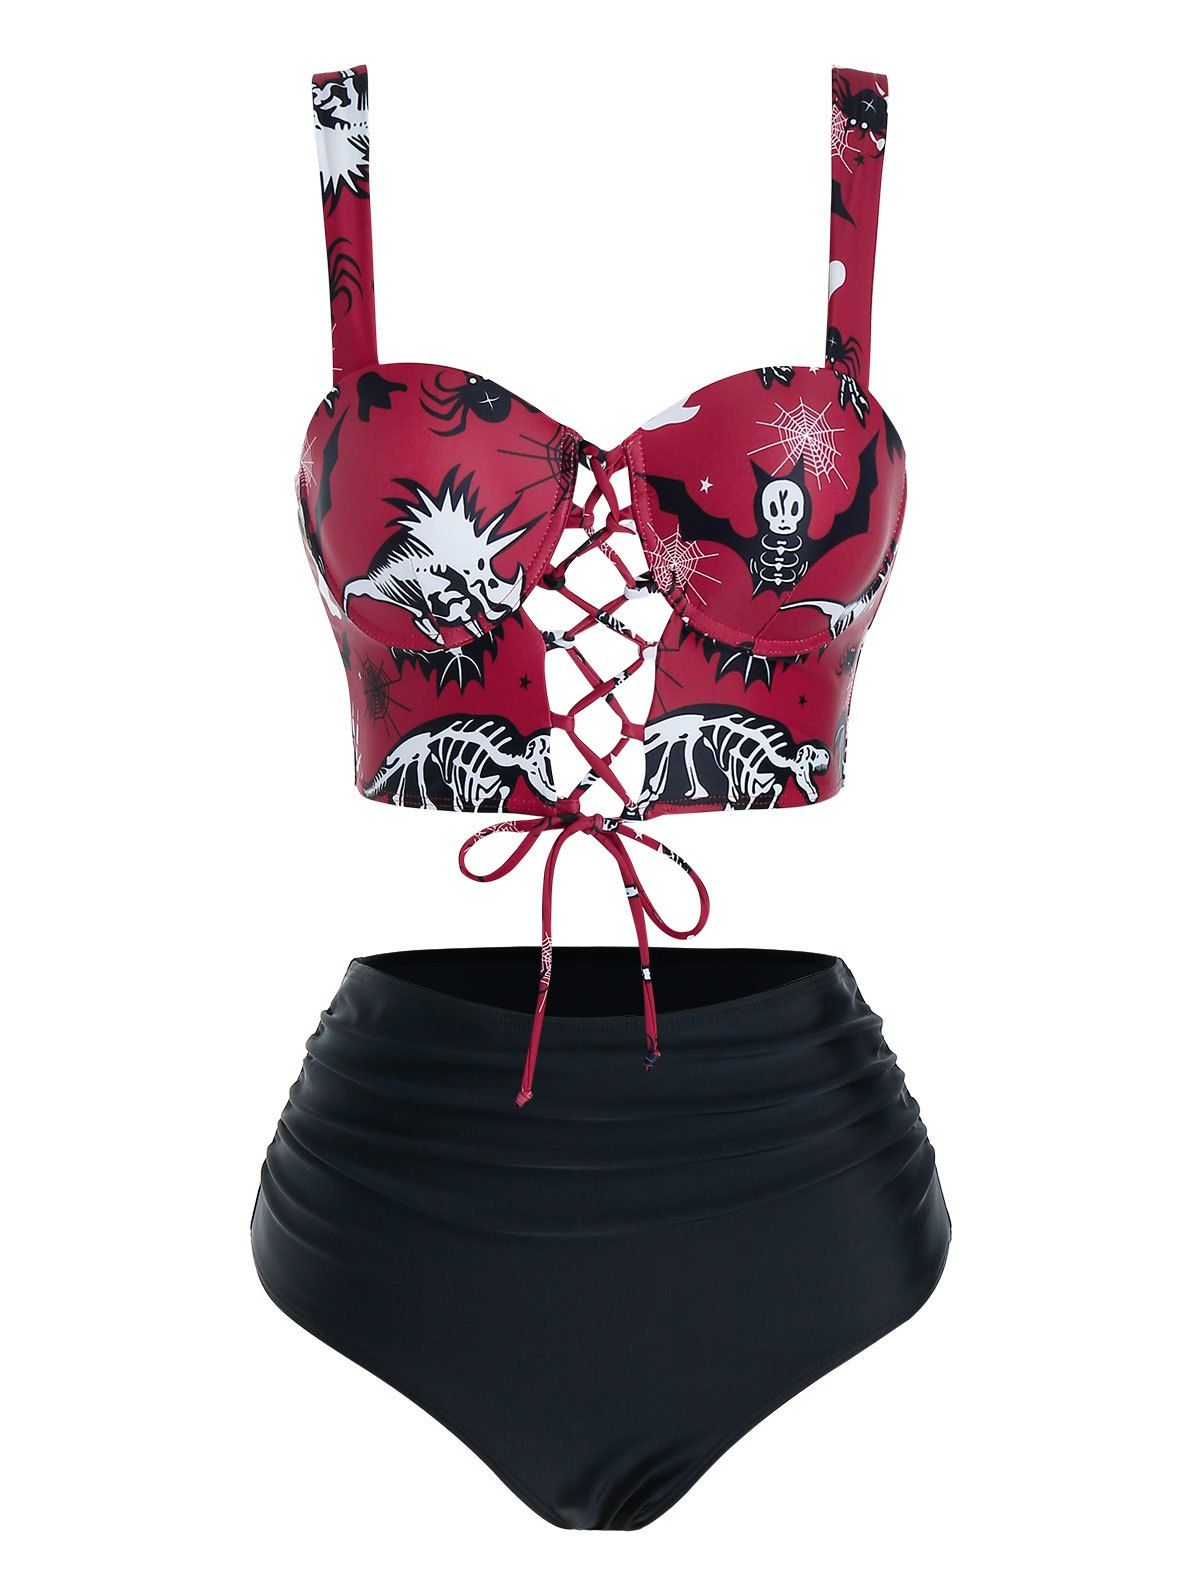 Bat Skeleton Print Lace Up High Waisted Tankini Swimwear - RED L